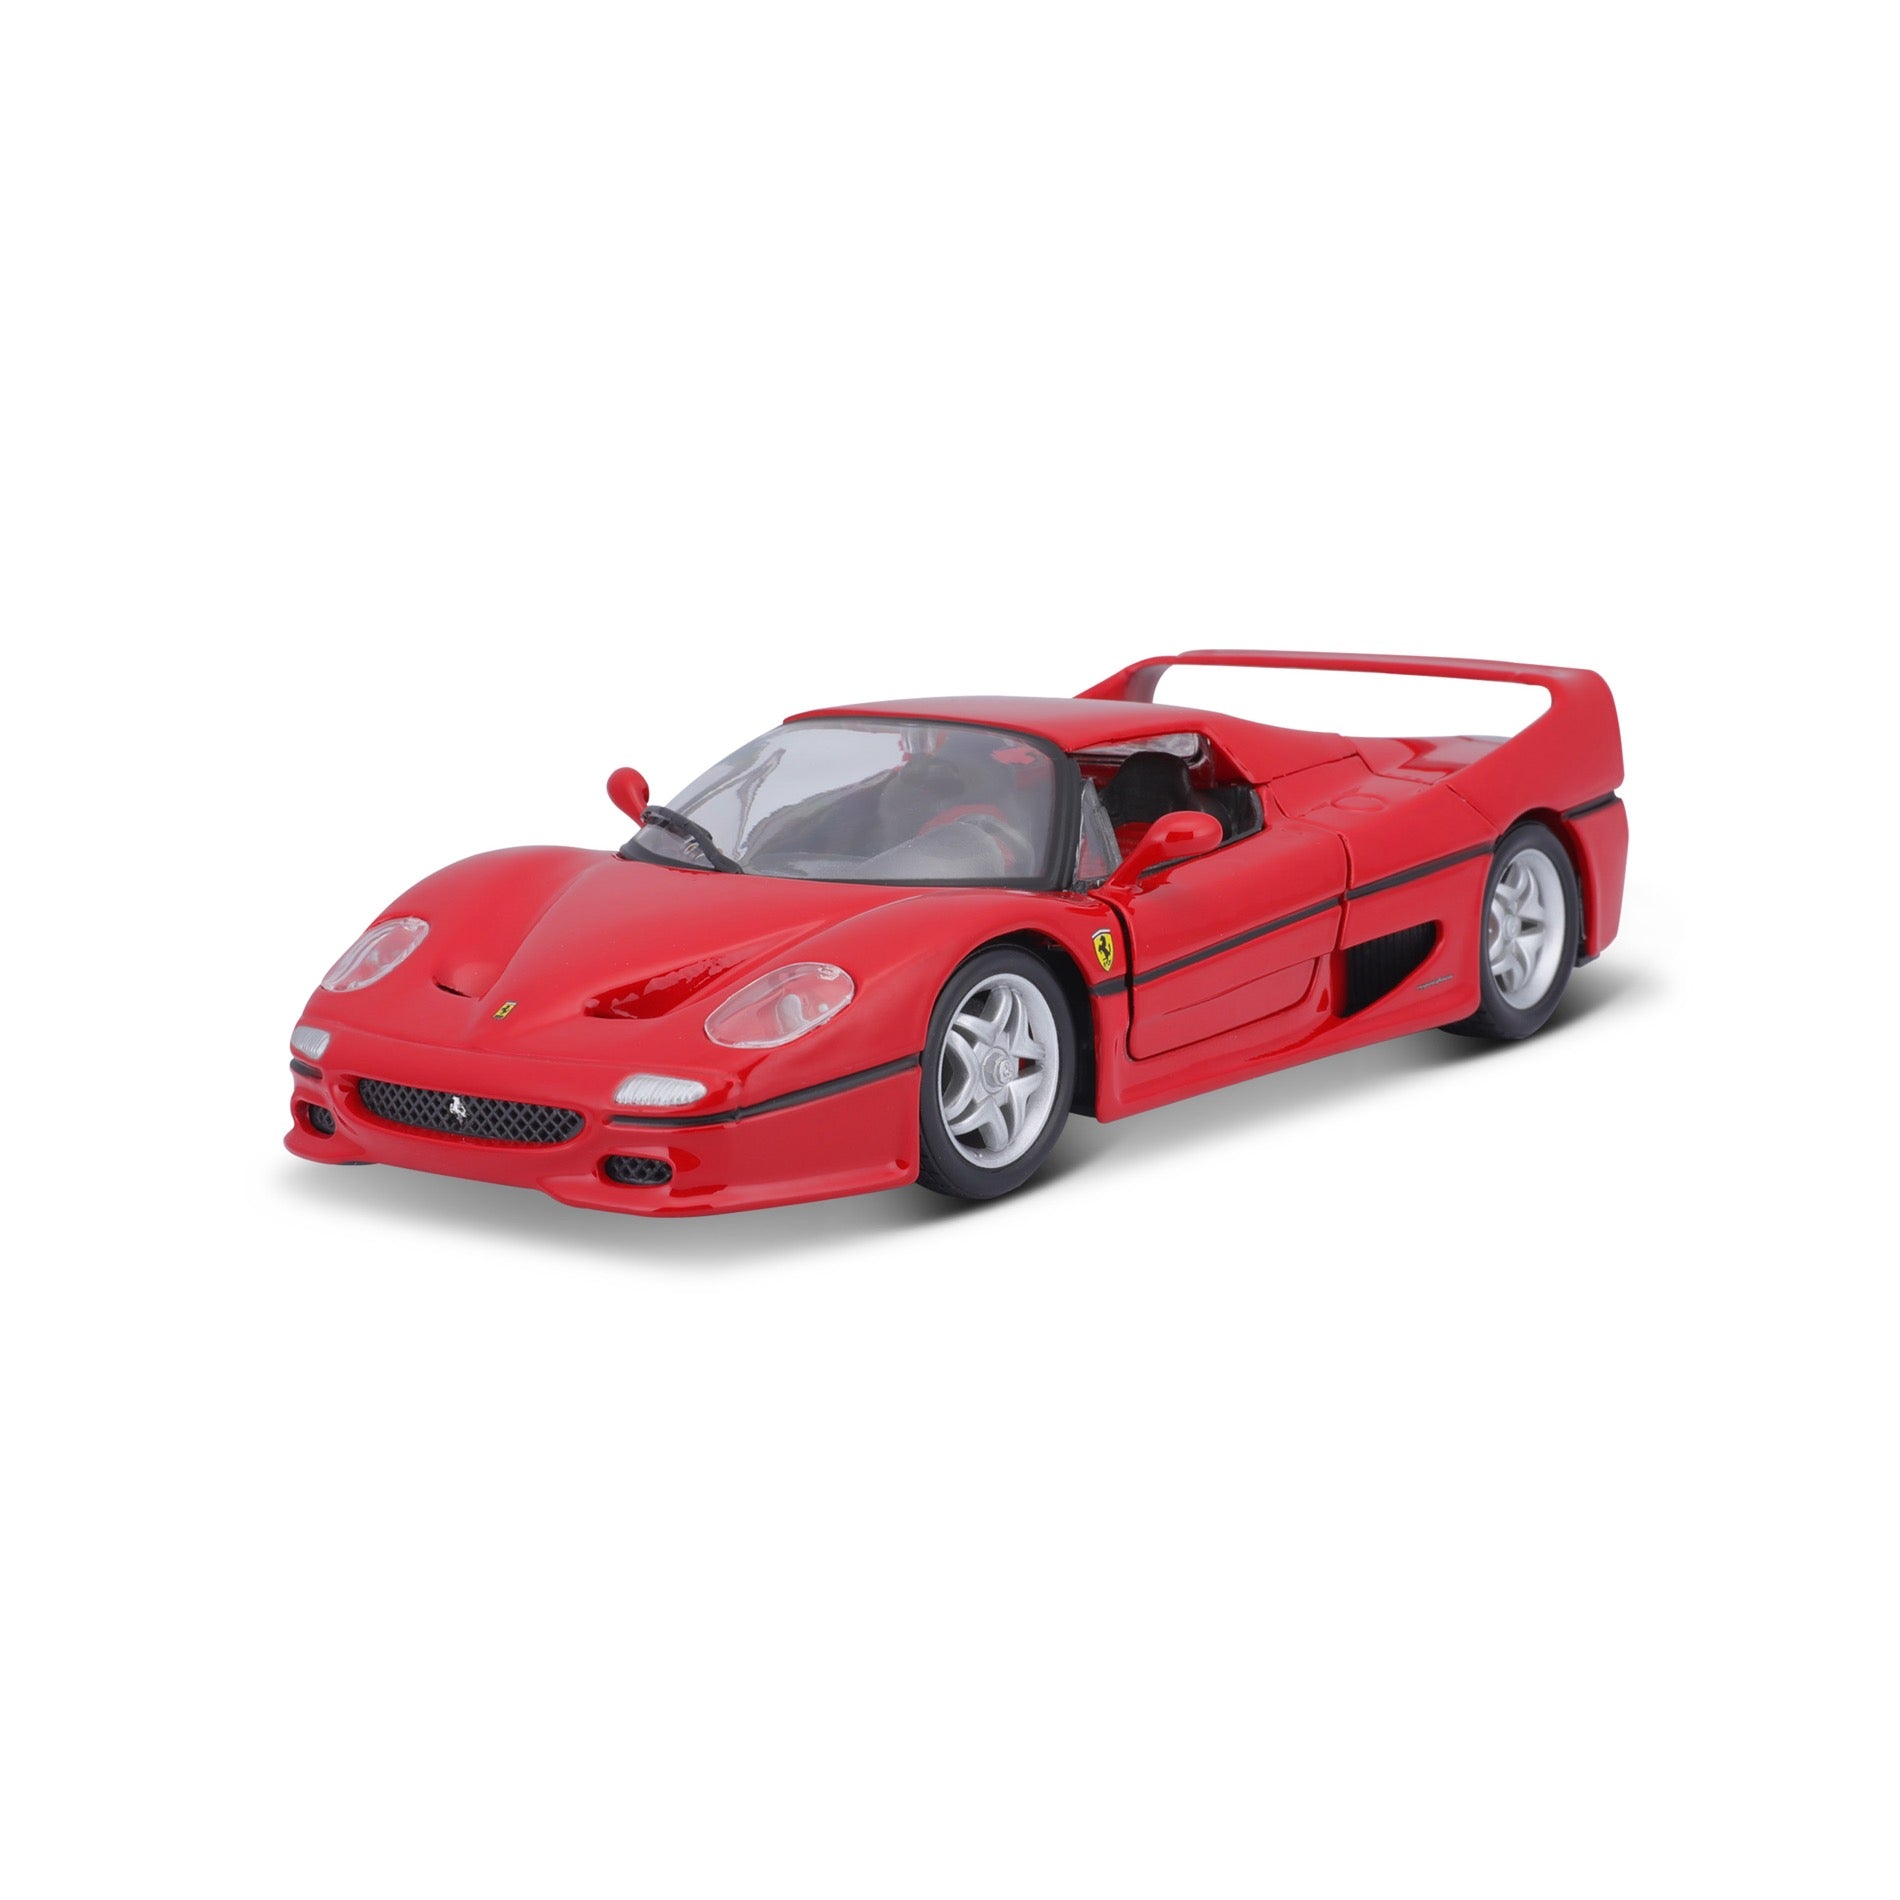 1:24 - Bburago Ferrari Car Collection R&P